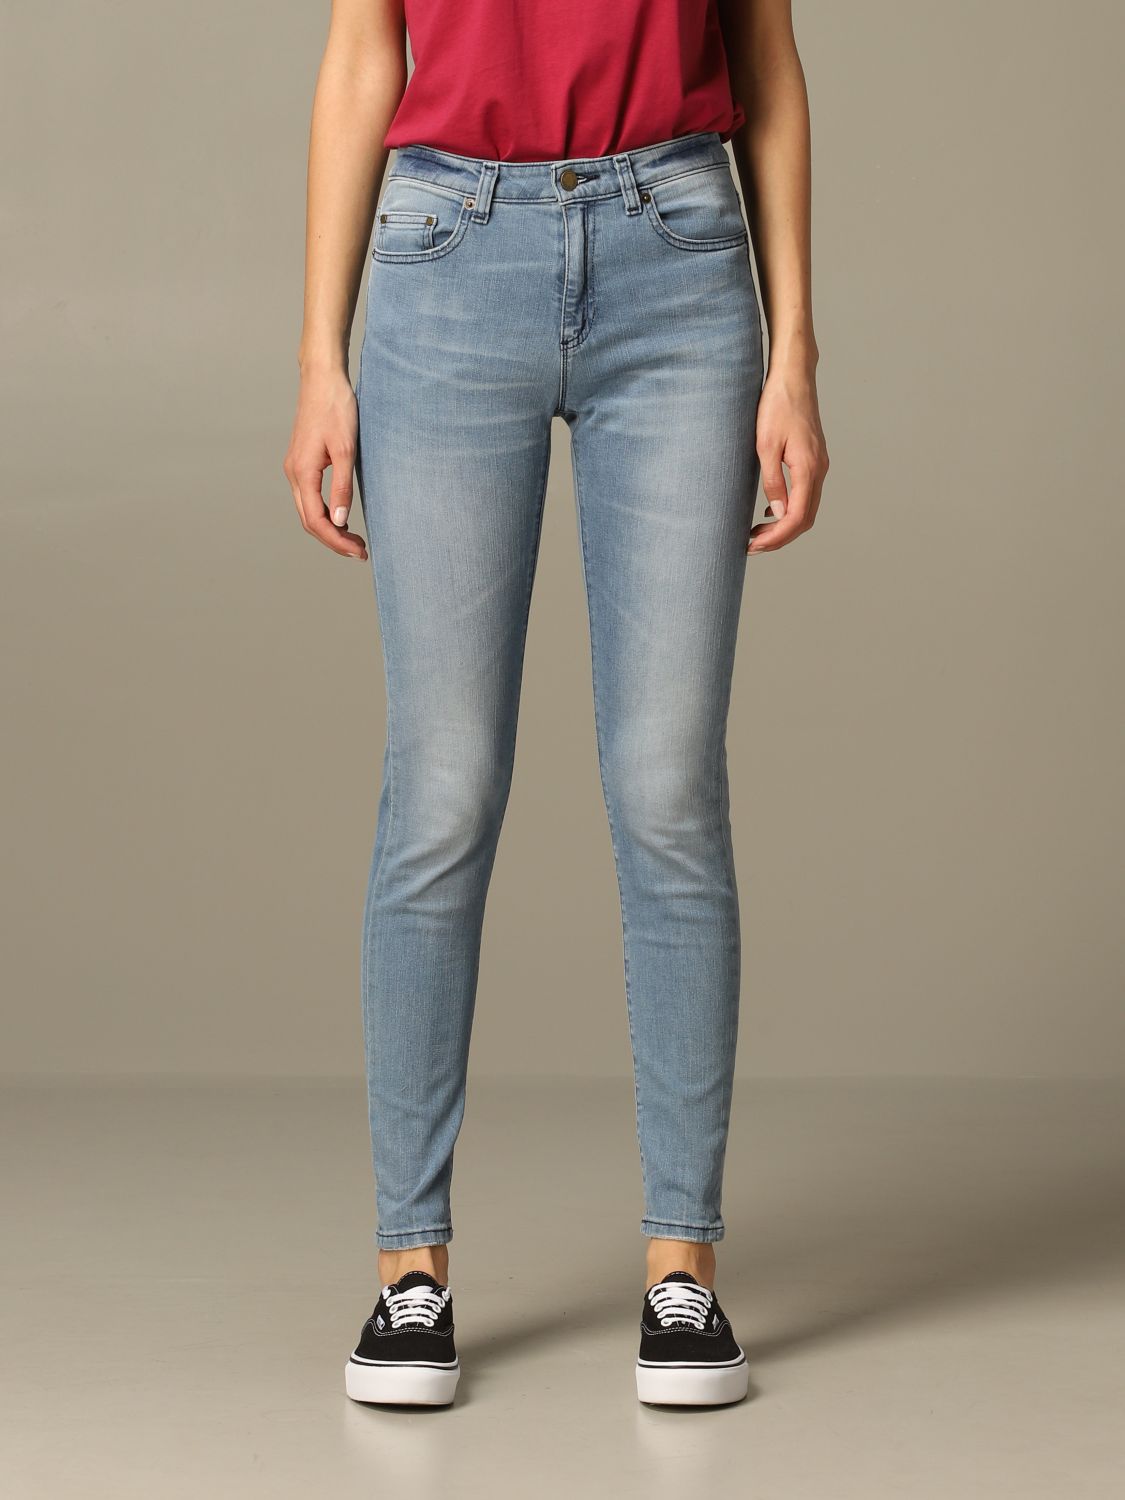 michael kors women's jeans